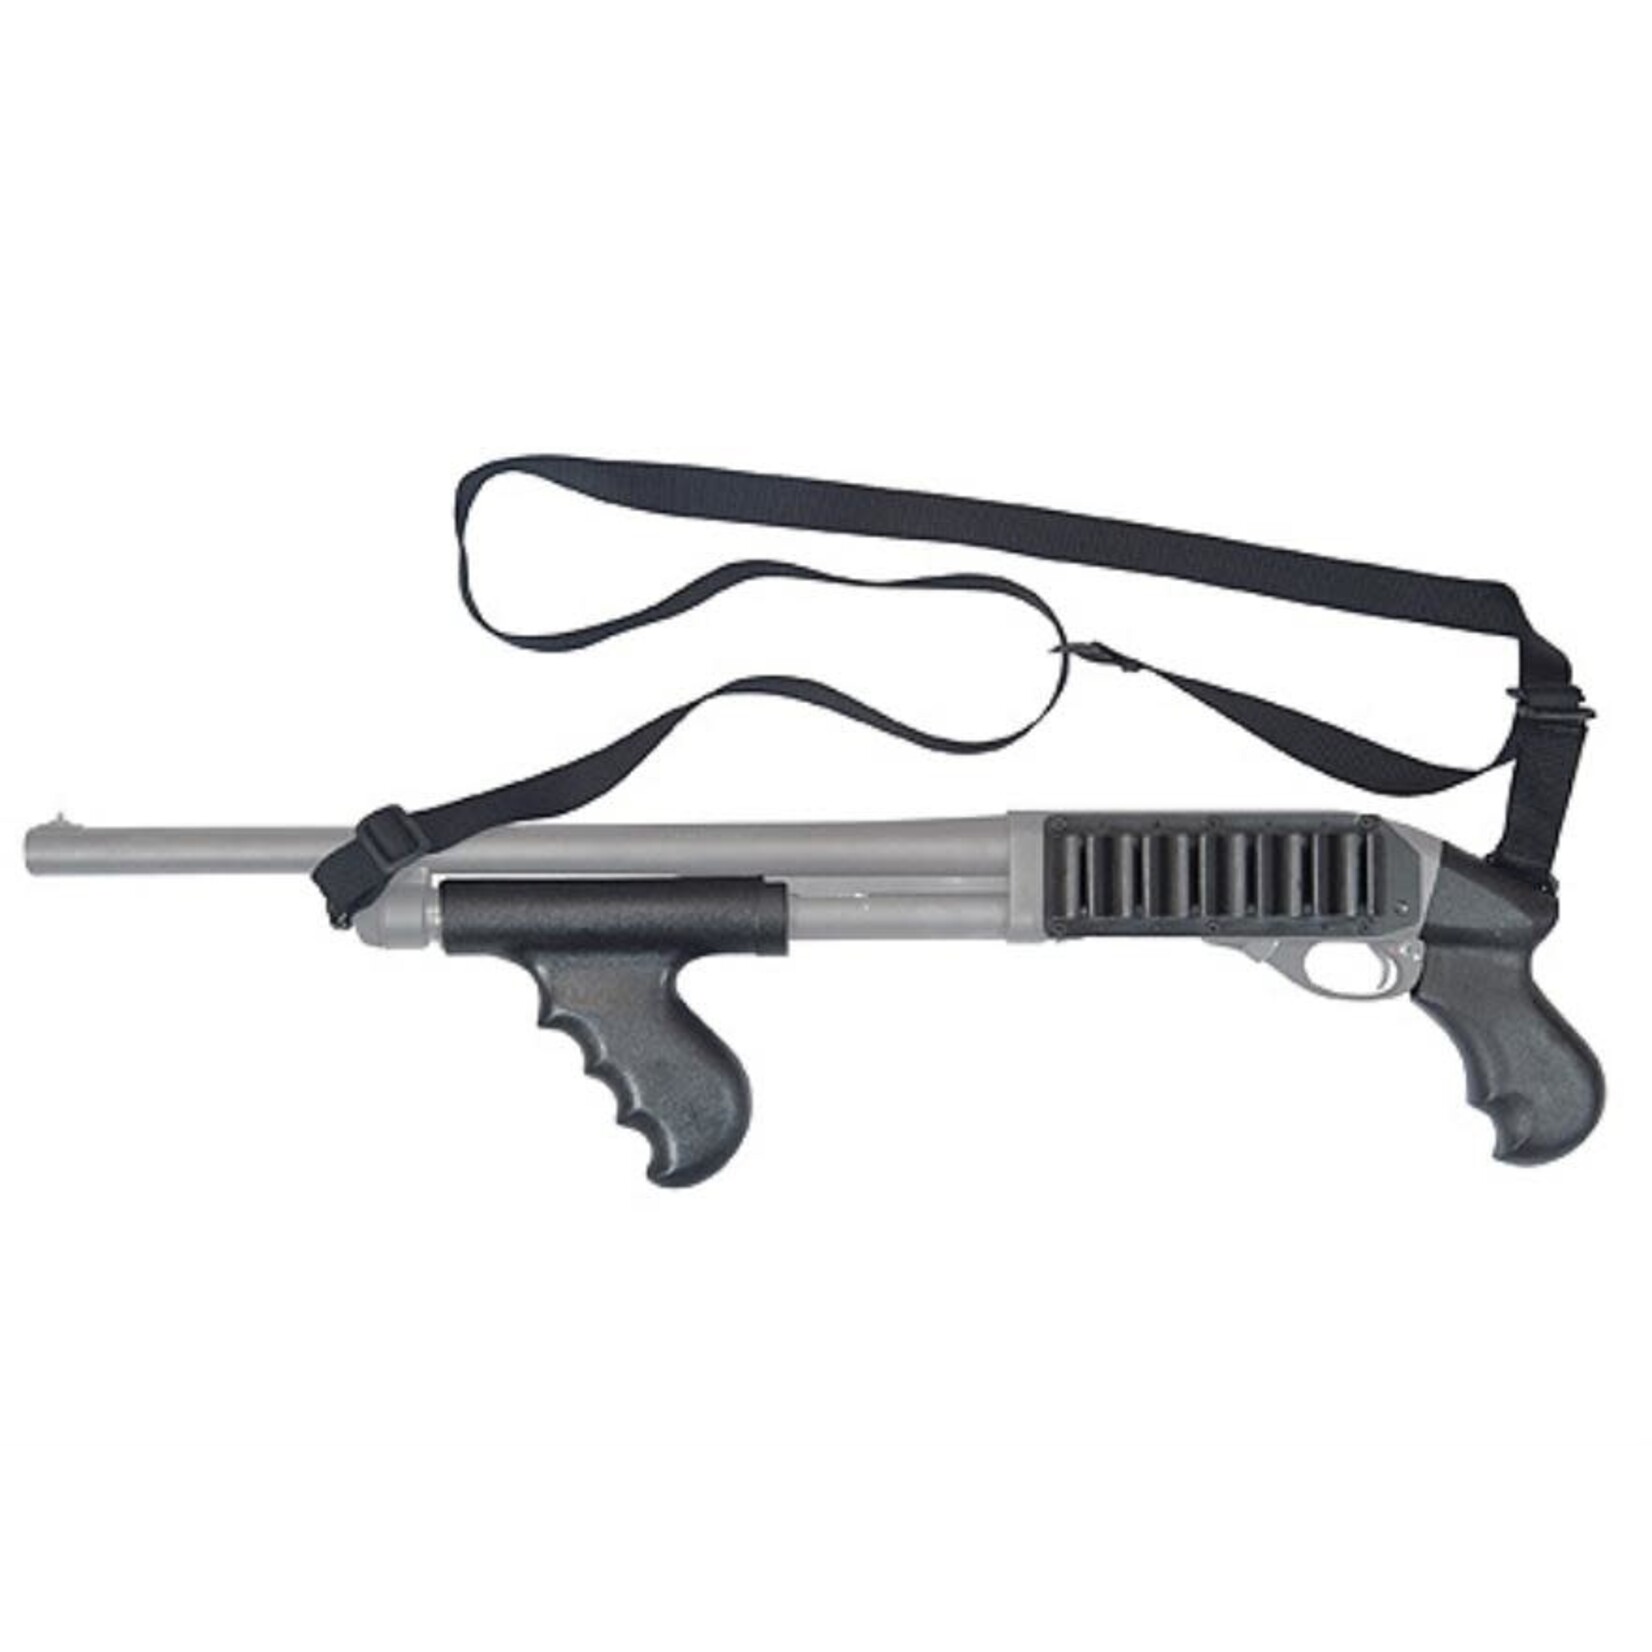 Tac Star Tactical Shotgun Conversion Kit Mossberg 500,590